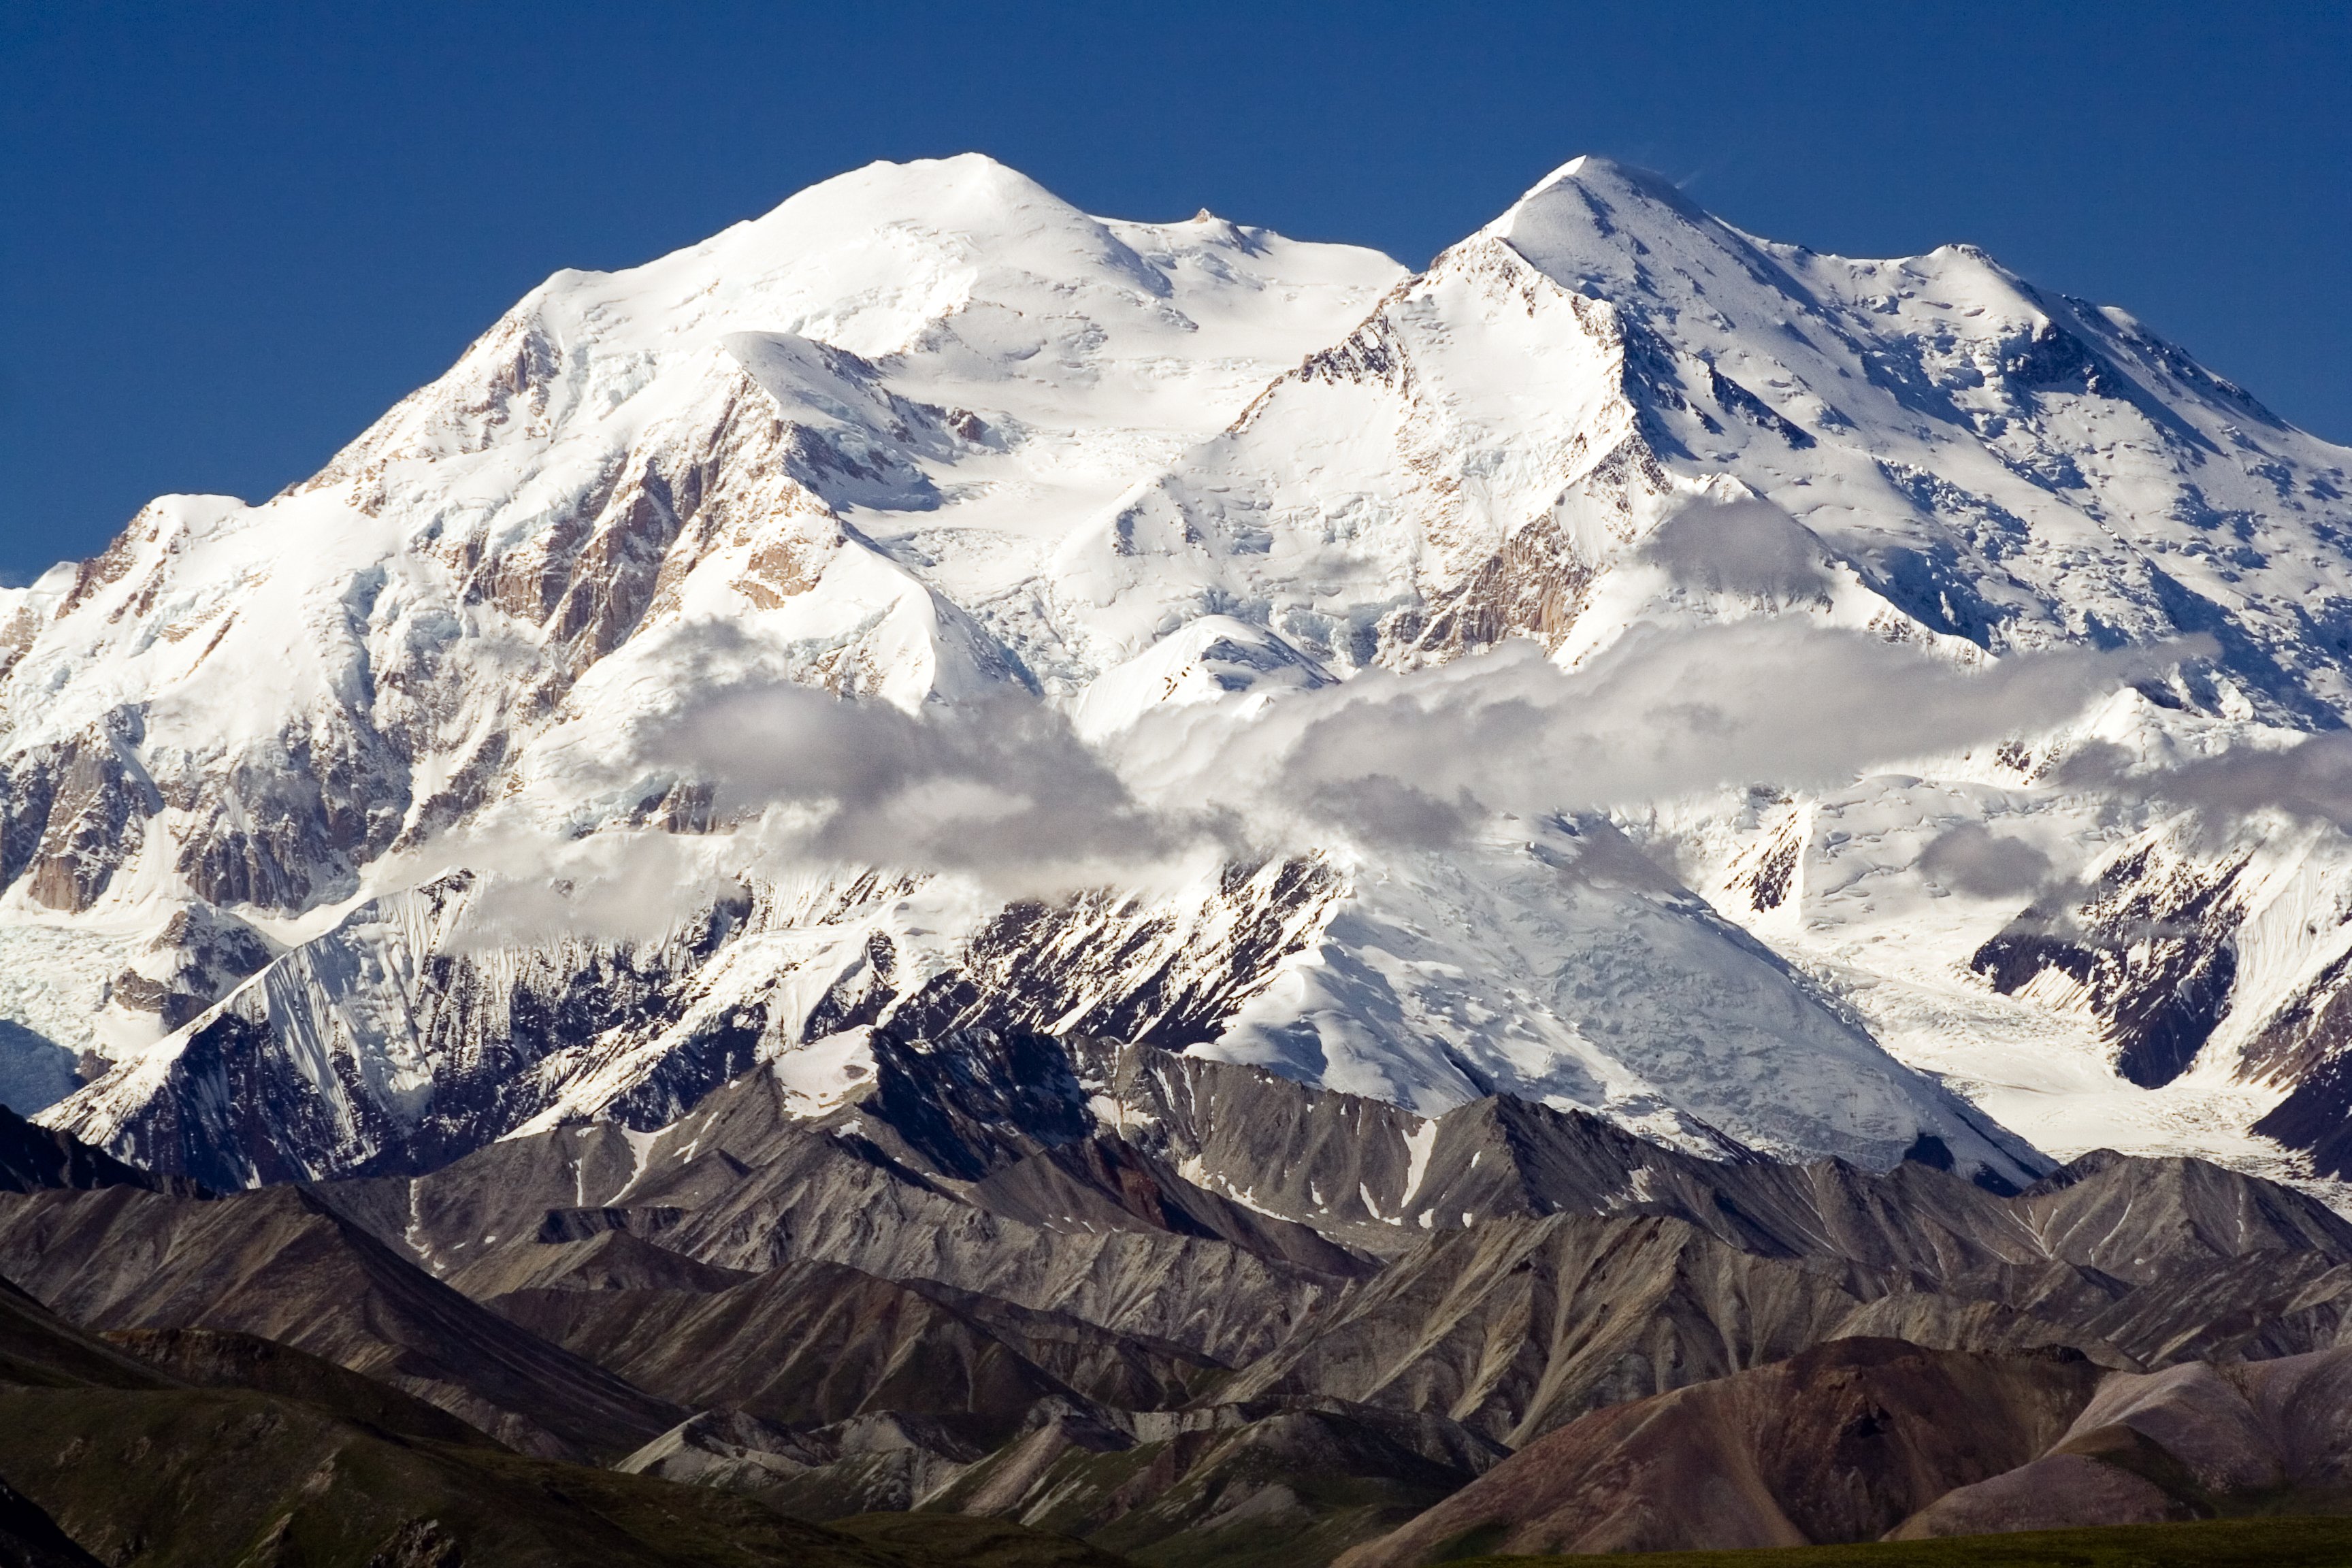 Alaska’s Magnificent Mount McKinley and Denali National Park